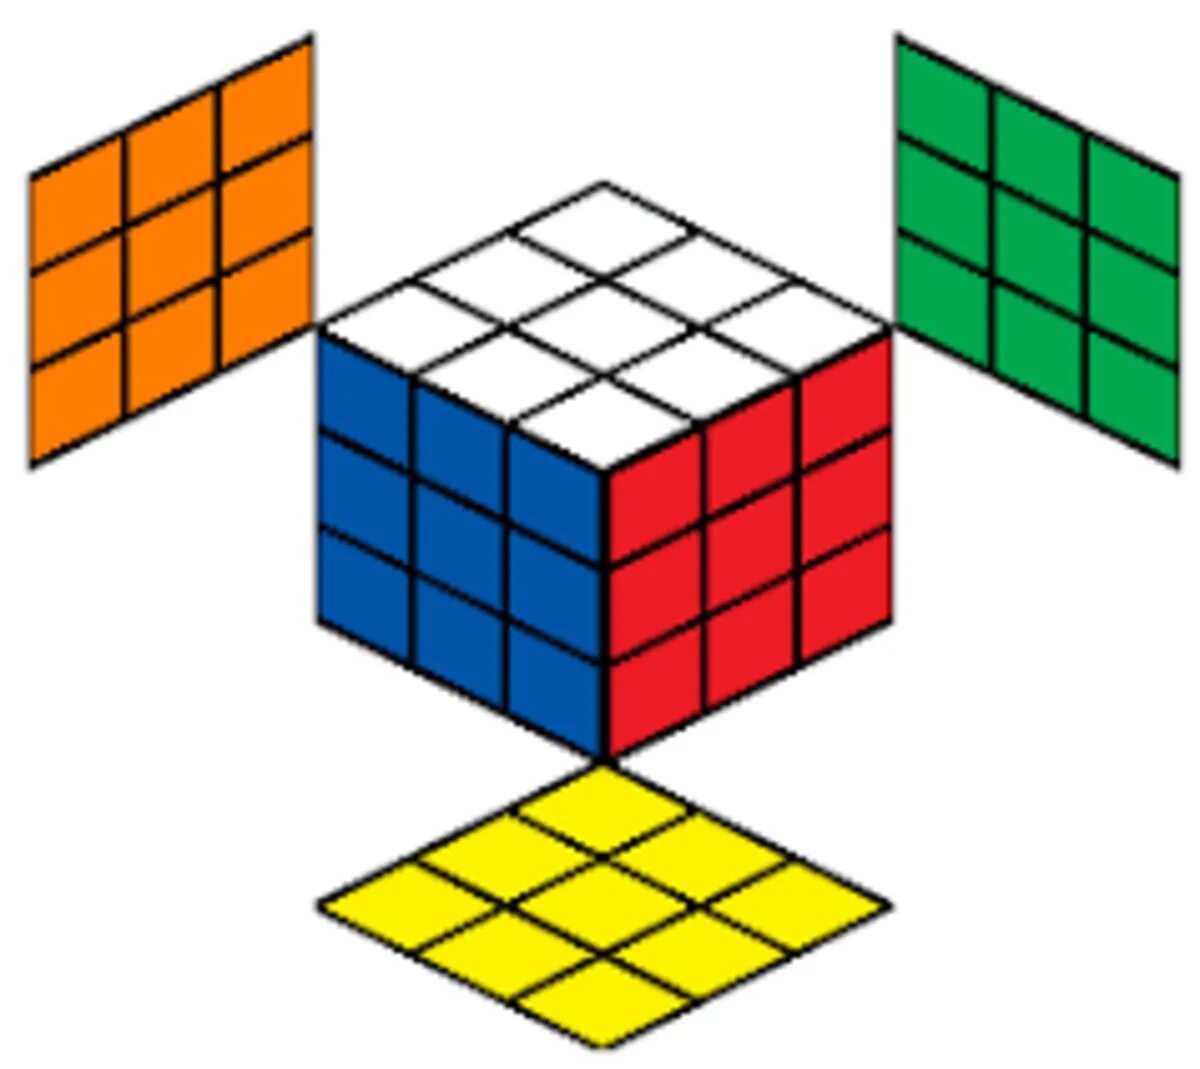 Сколько граней у кубика 3 3. Стороны кубика Рубика 3х3. Кубик-Рубика 3х3 цвета сторон. Расположение сторон в кубике Рубика 3х3. Расположение цветов на кубике Рубика 3х3.